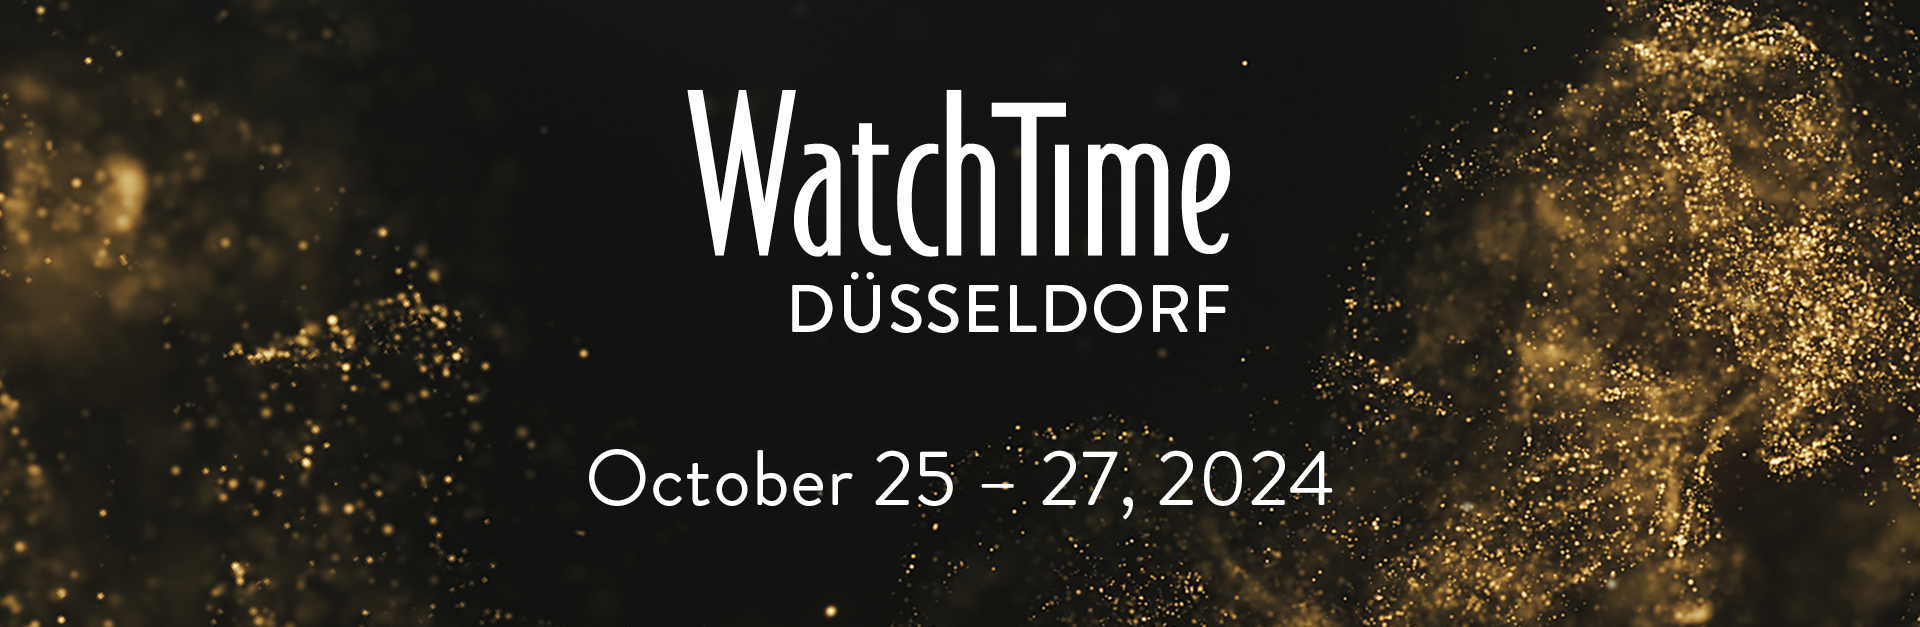 WatchTime Düsseldorf - October 25-26, 2024